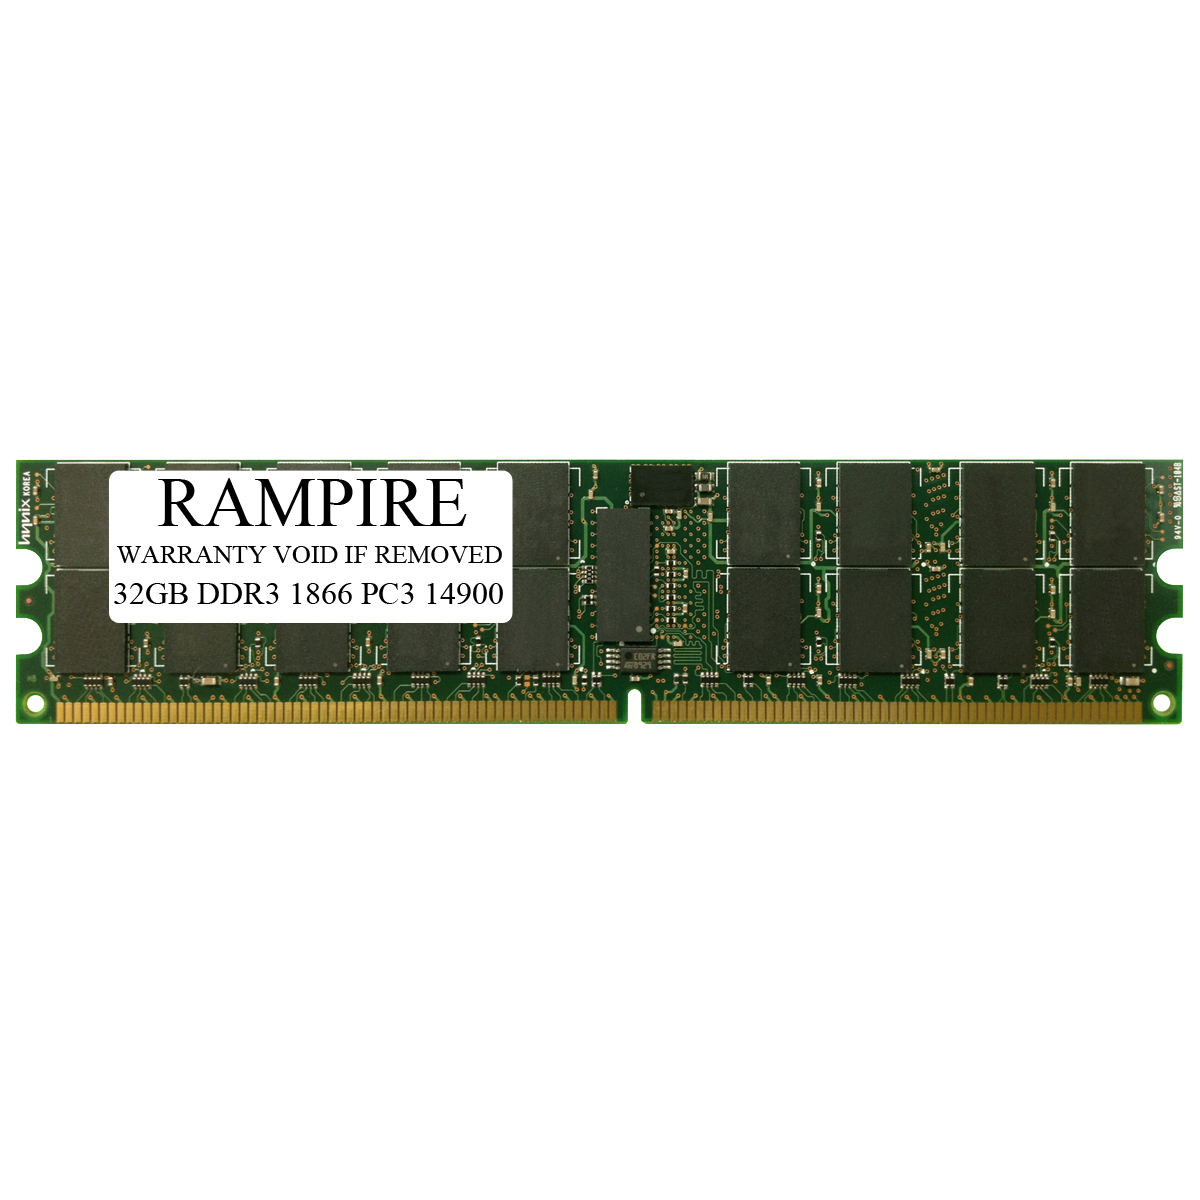 RAMPIRE 32GB DDR3 1866 (PC3 14900) 240-Pin SDRAM 4Rx4 Standard Profile 1.5V ECC Registered Server Memory